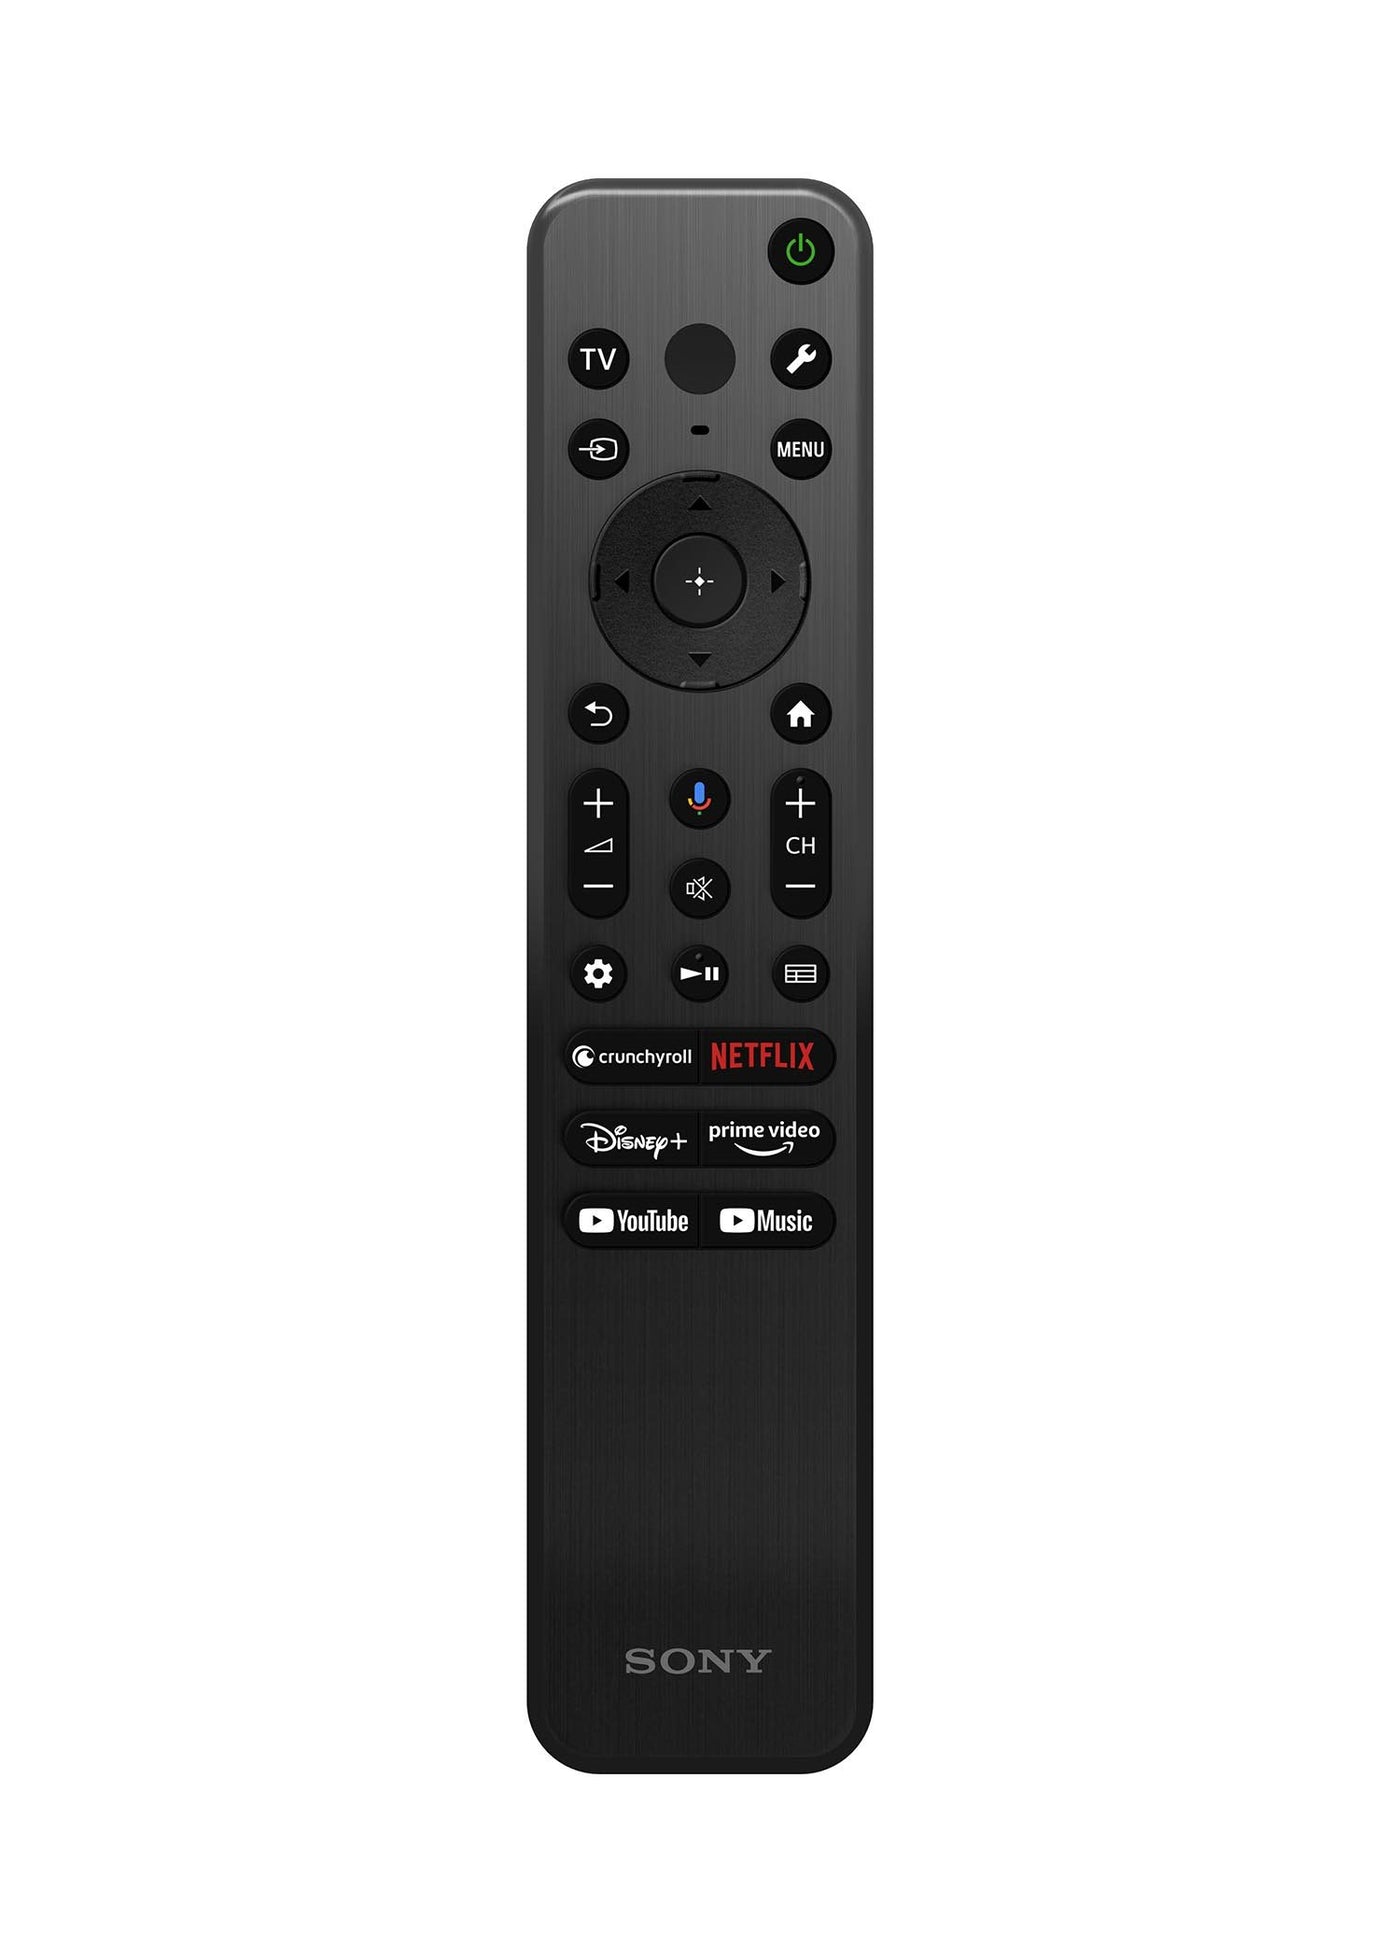 SONY 85" X77L 4K HDR LED TV Google TV - KD85X77L